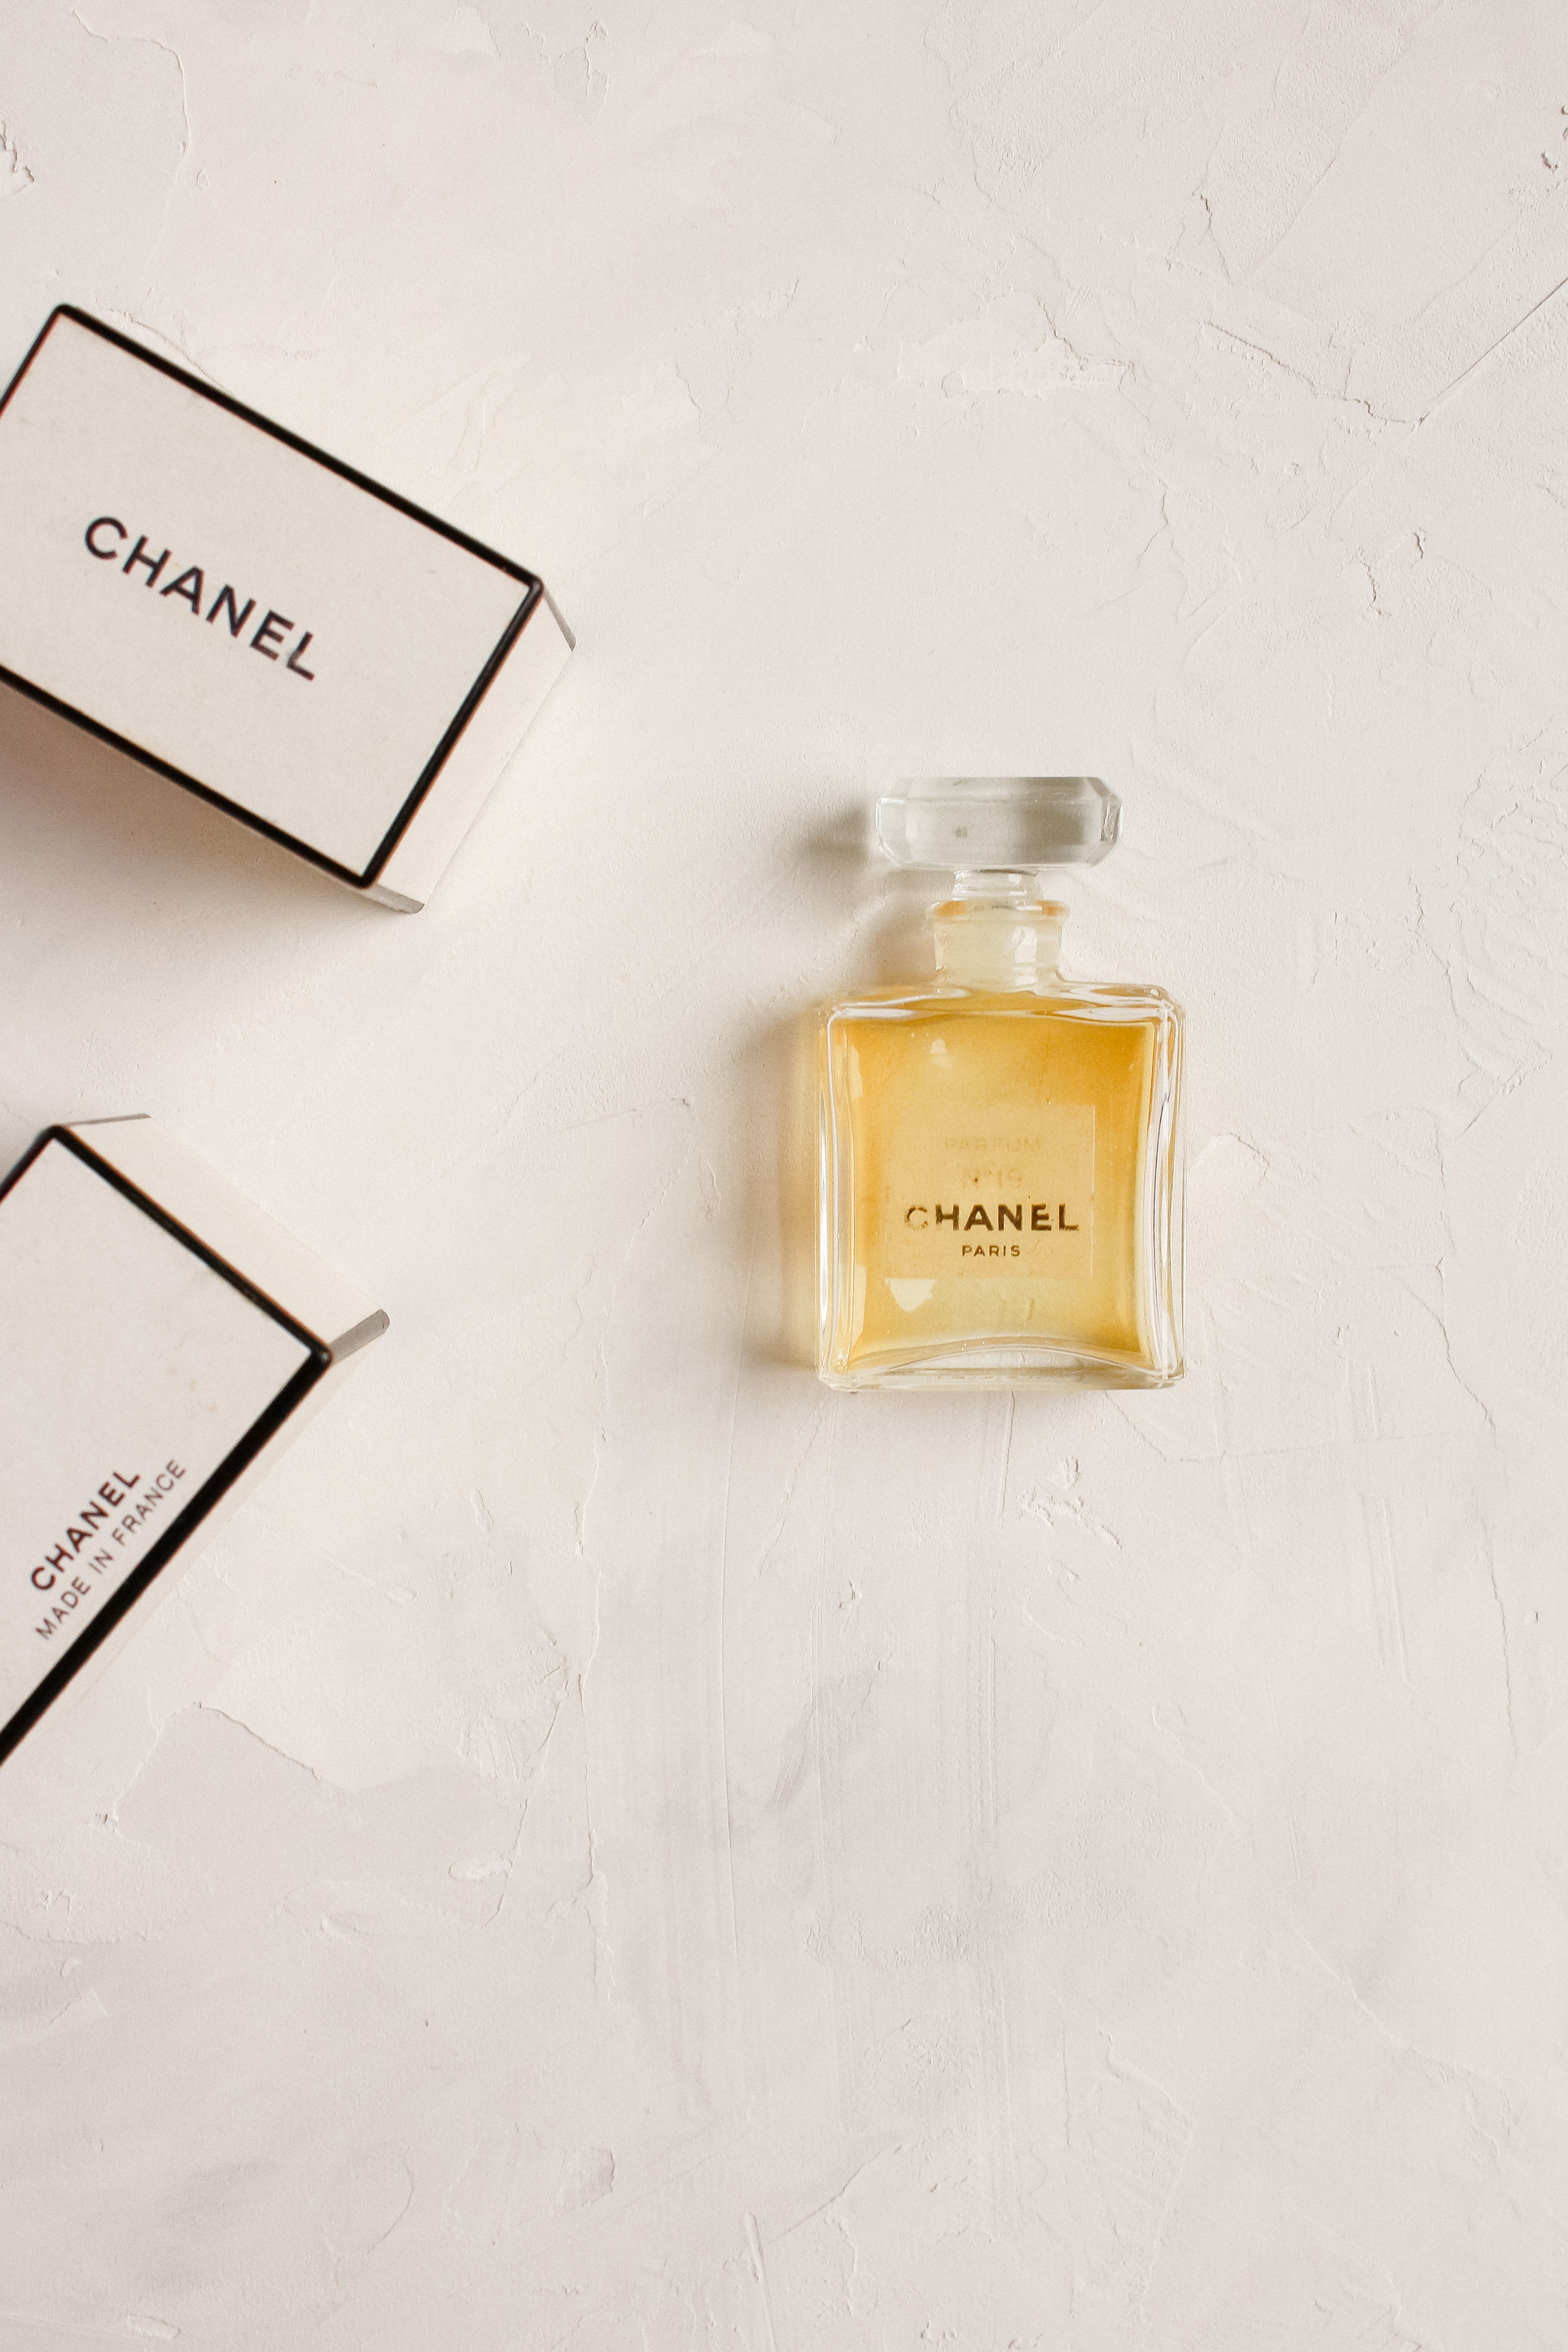 COCO MADEMOISELLE Eau de Parfum Spray, Chanel Paris Perfume 1.7 OZ Size,  Vintage Perfume, Age Year 2001, Estate Item